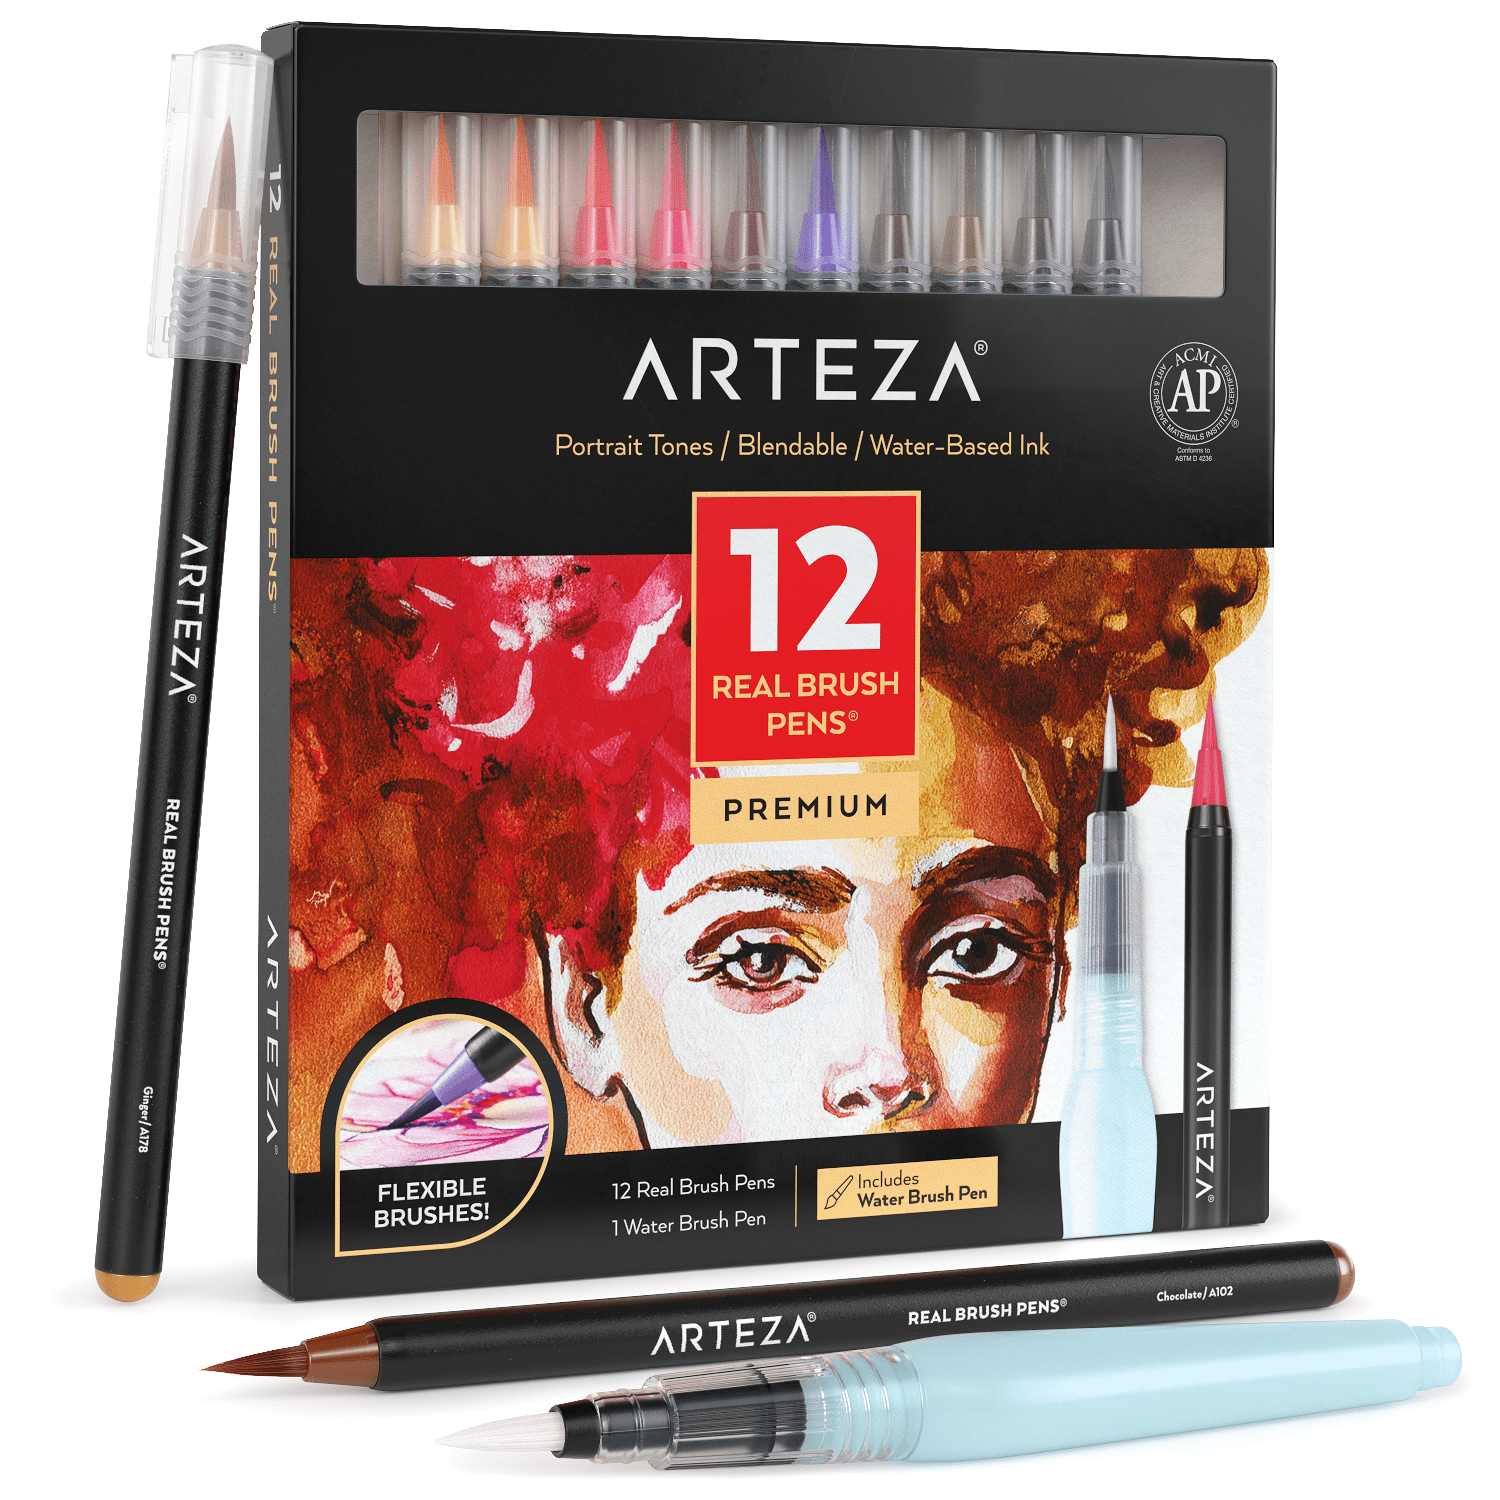 Arteza Gel Pens, Super Glitter, Assorted Colors - Doodle, Draw